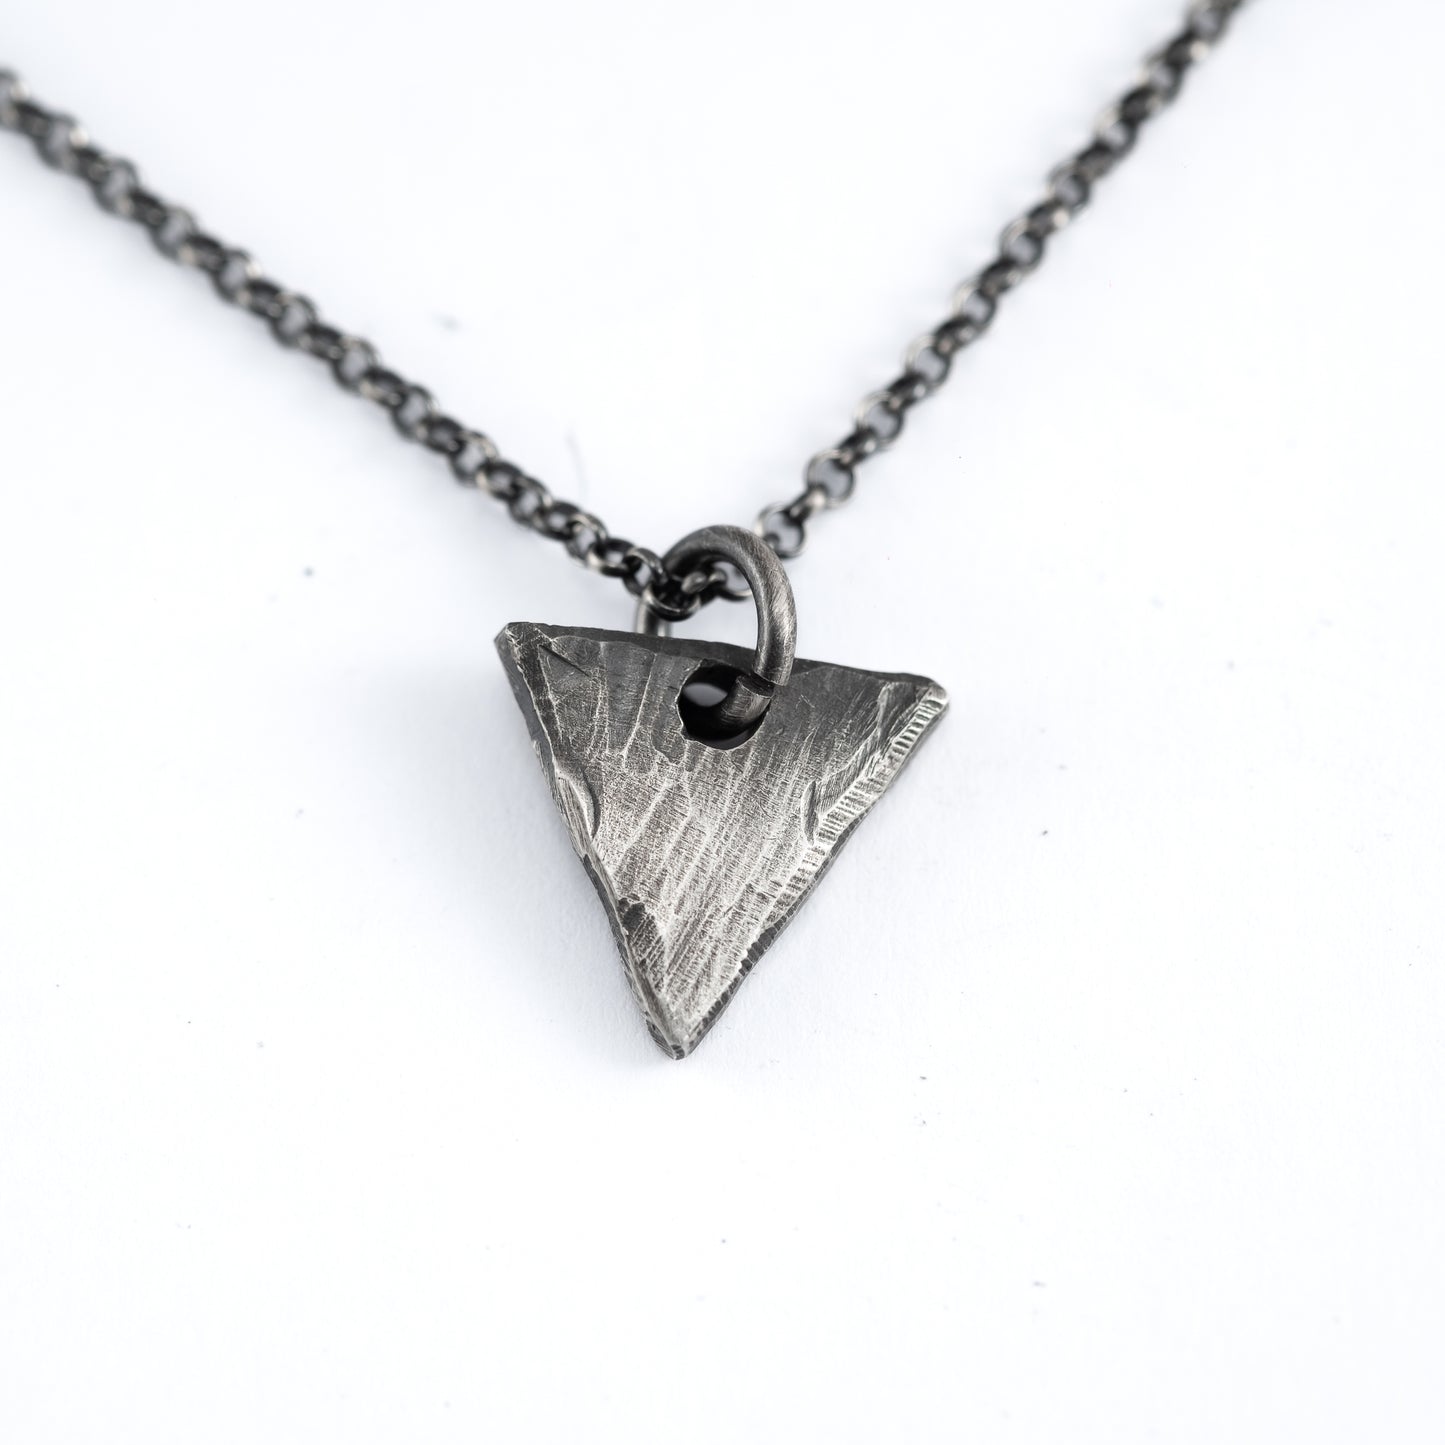 Rustic Triangle pendant